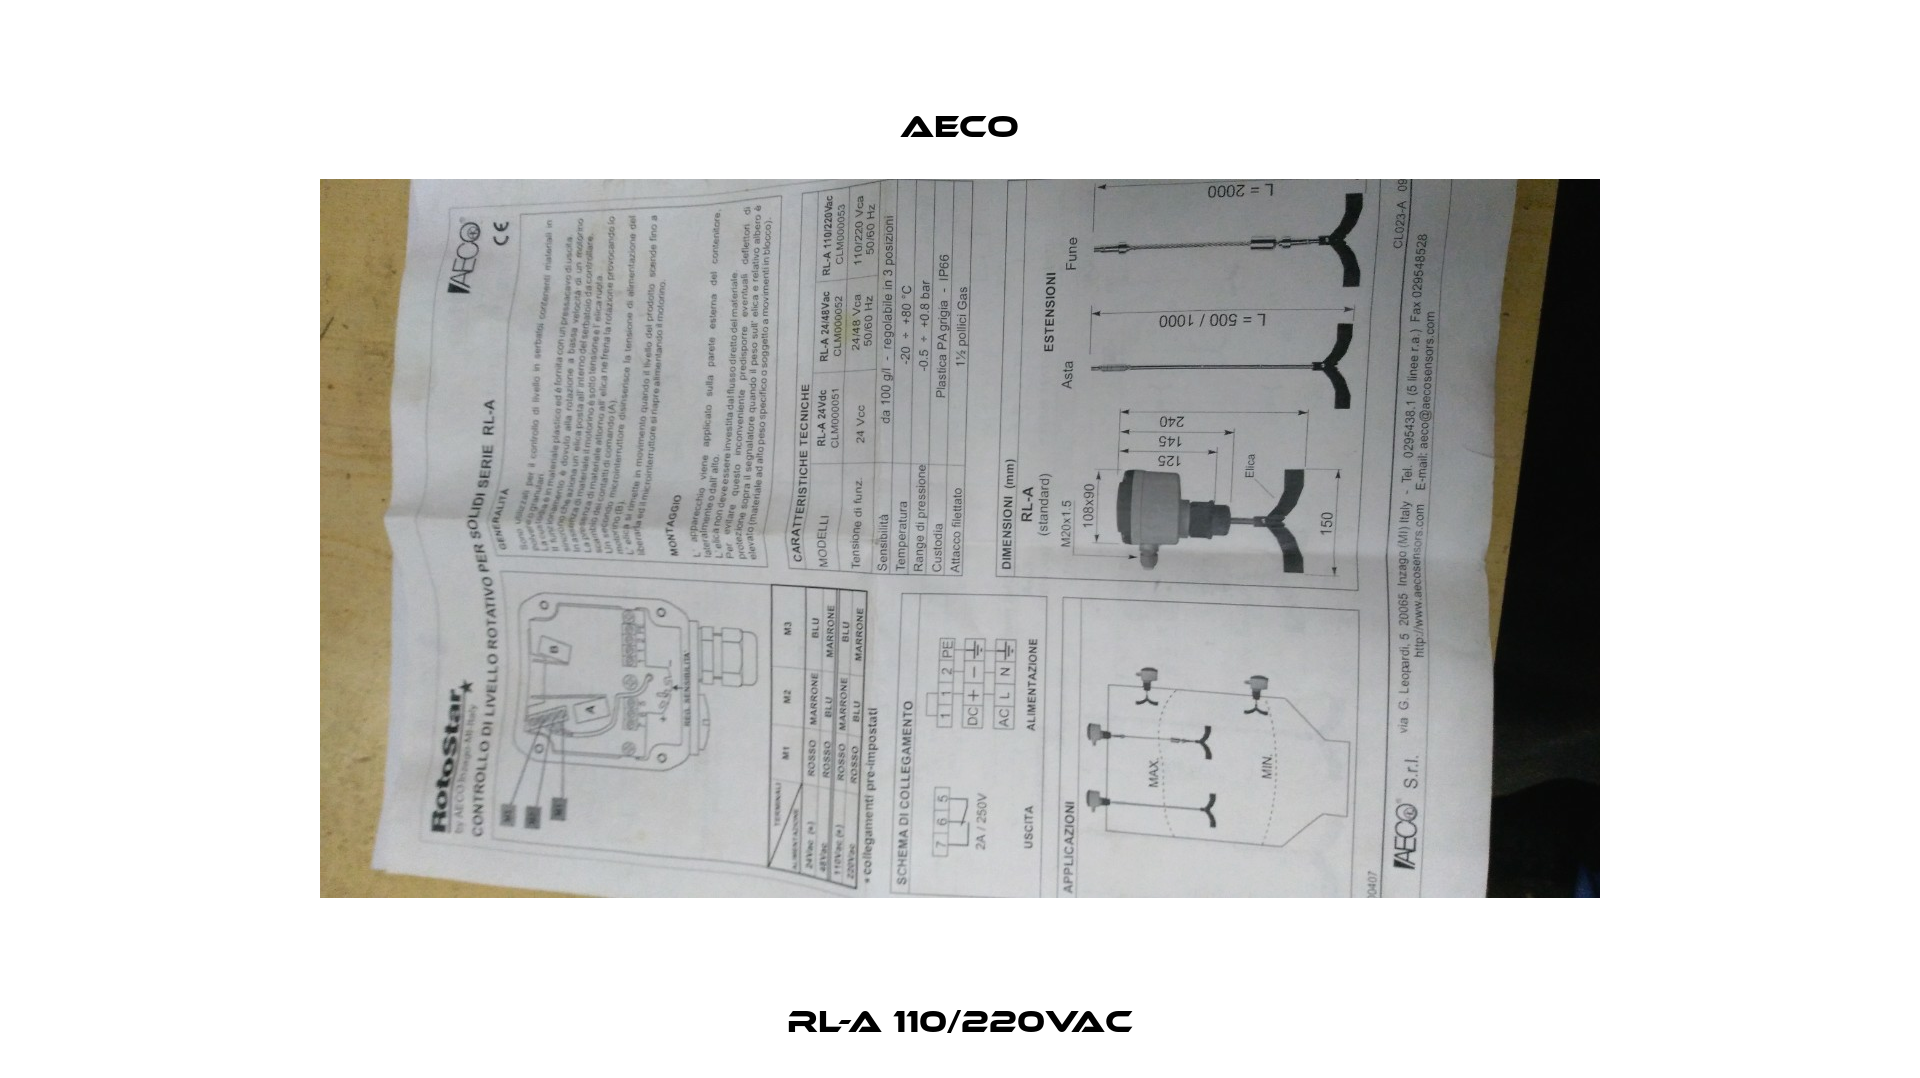 RL-A 110/220Vac Aeco